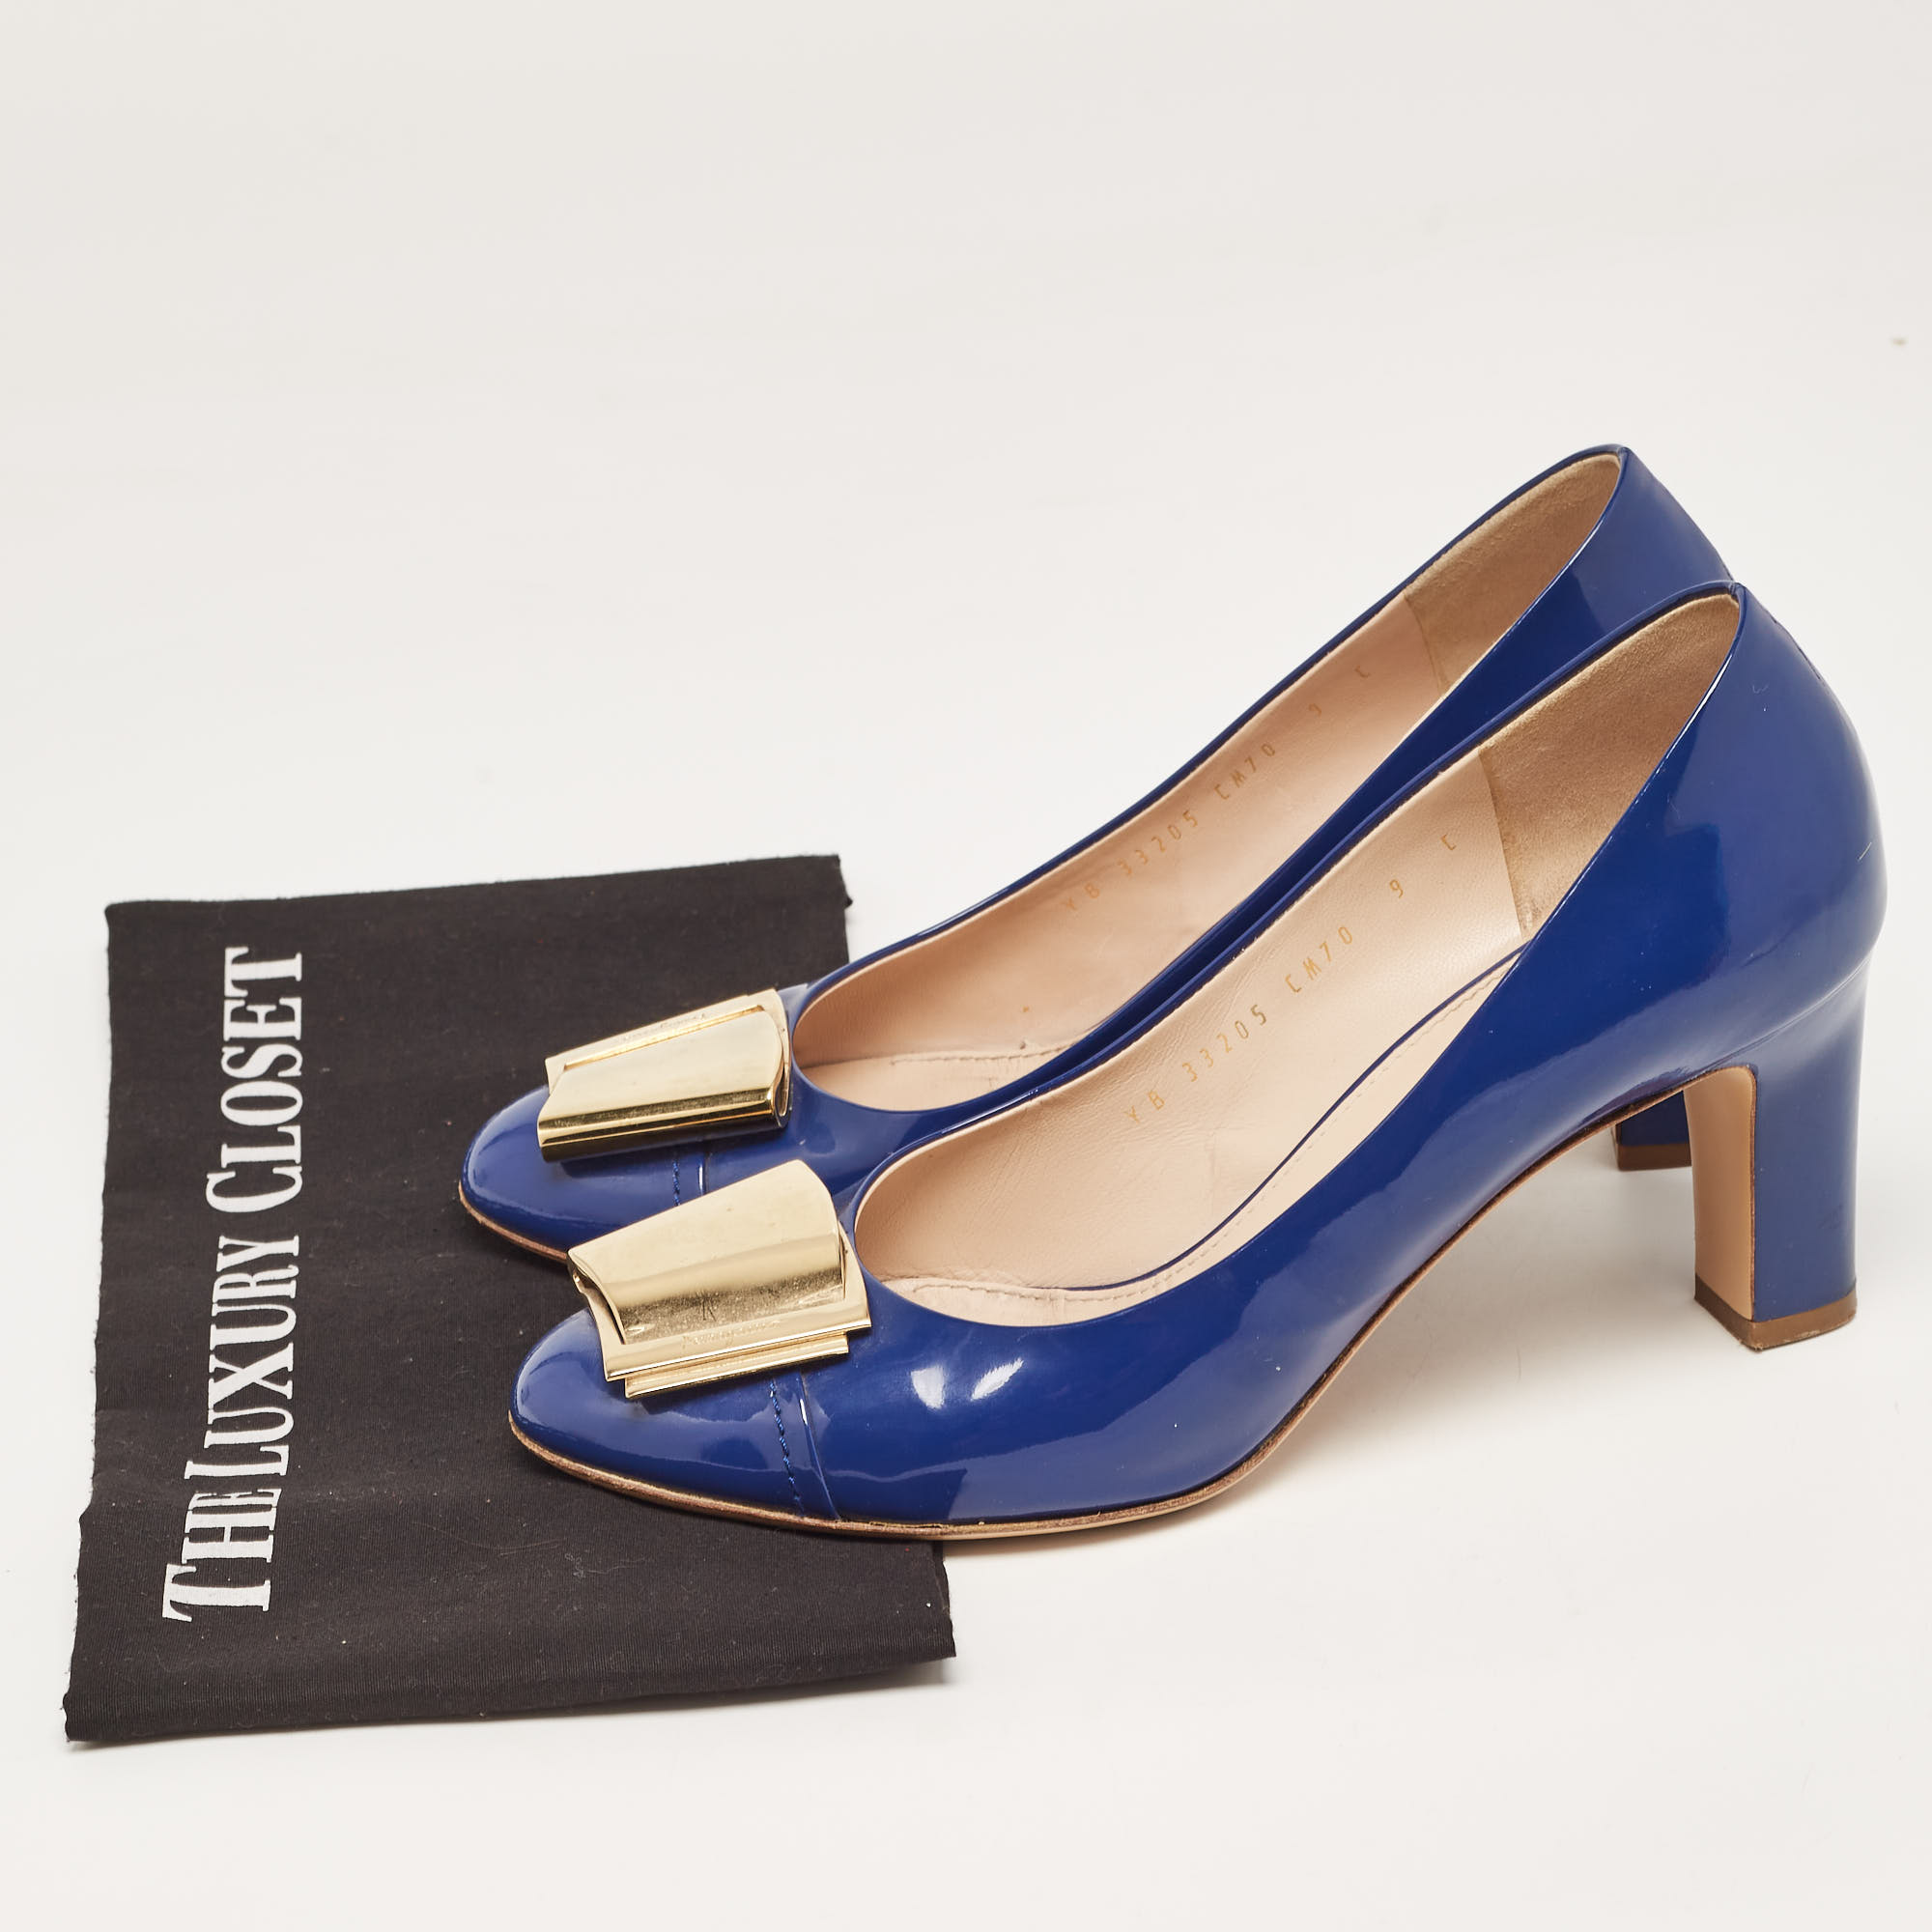 Salvatore Ferragamo Blue Patent Leather Block Heel Pumps Size 39.5